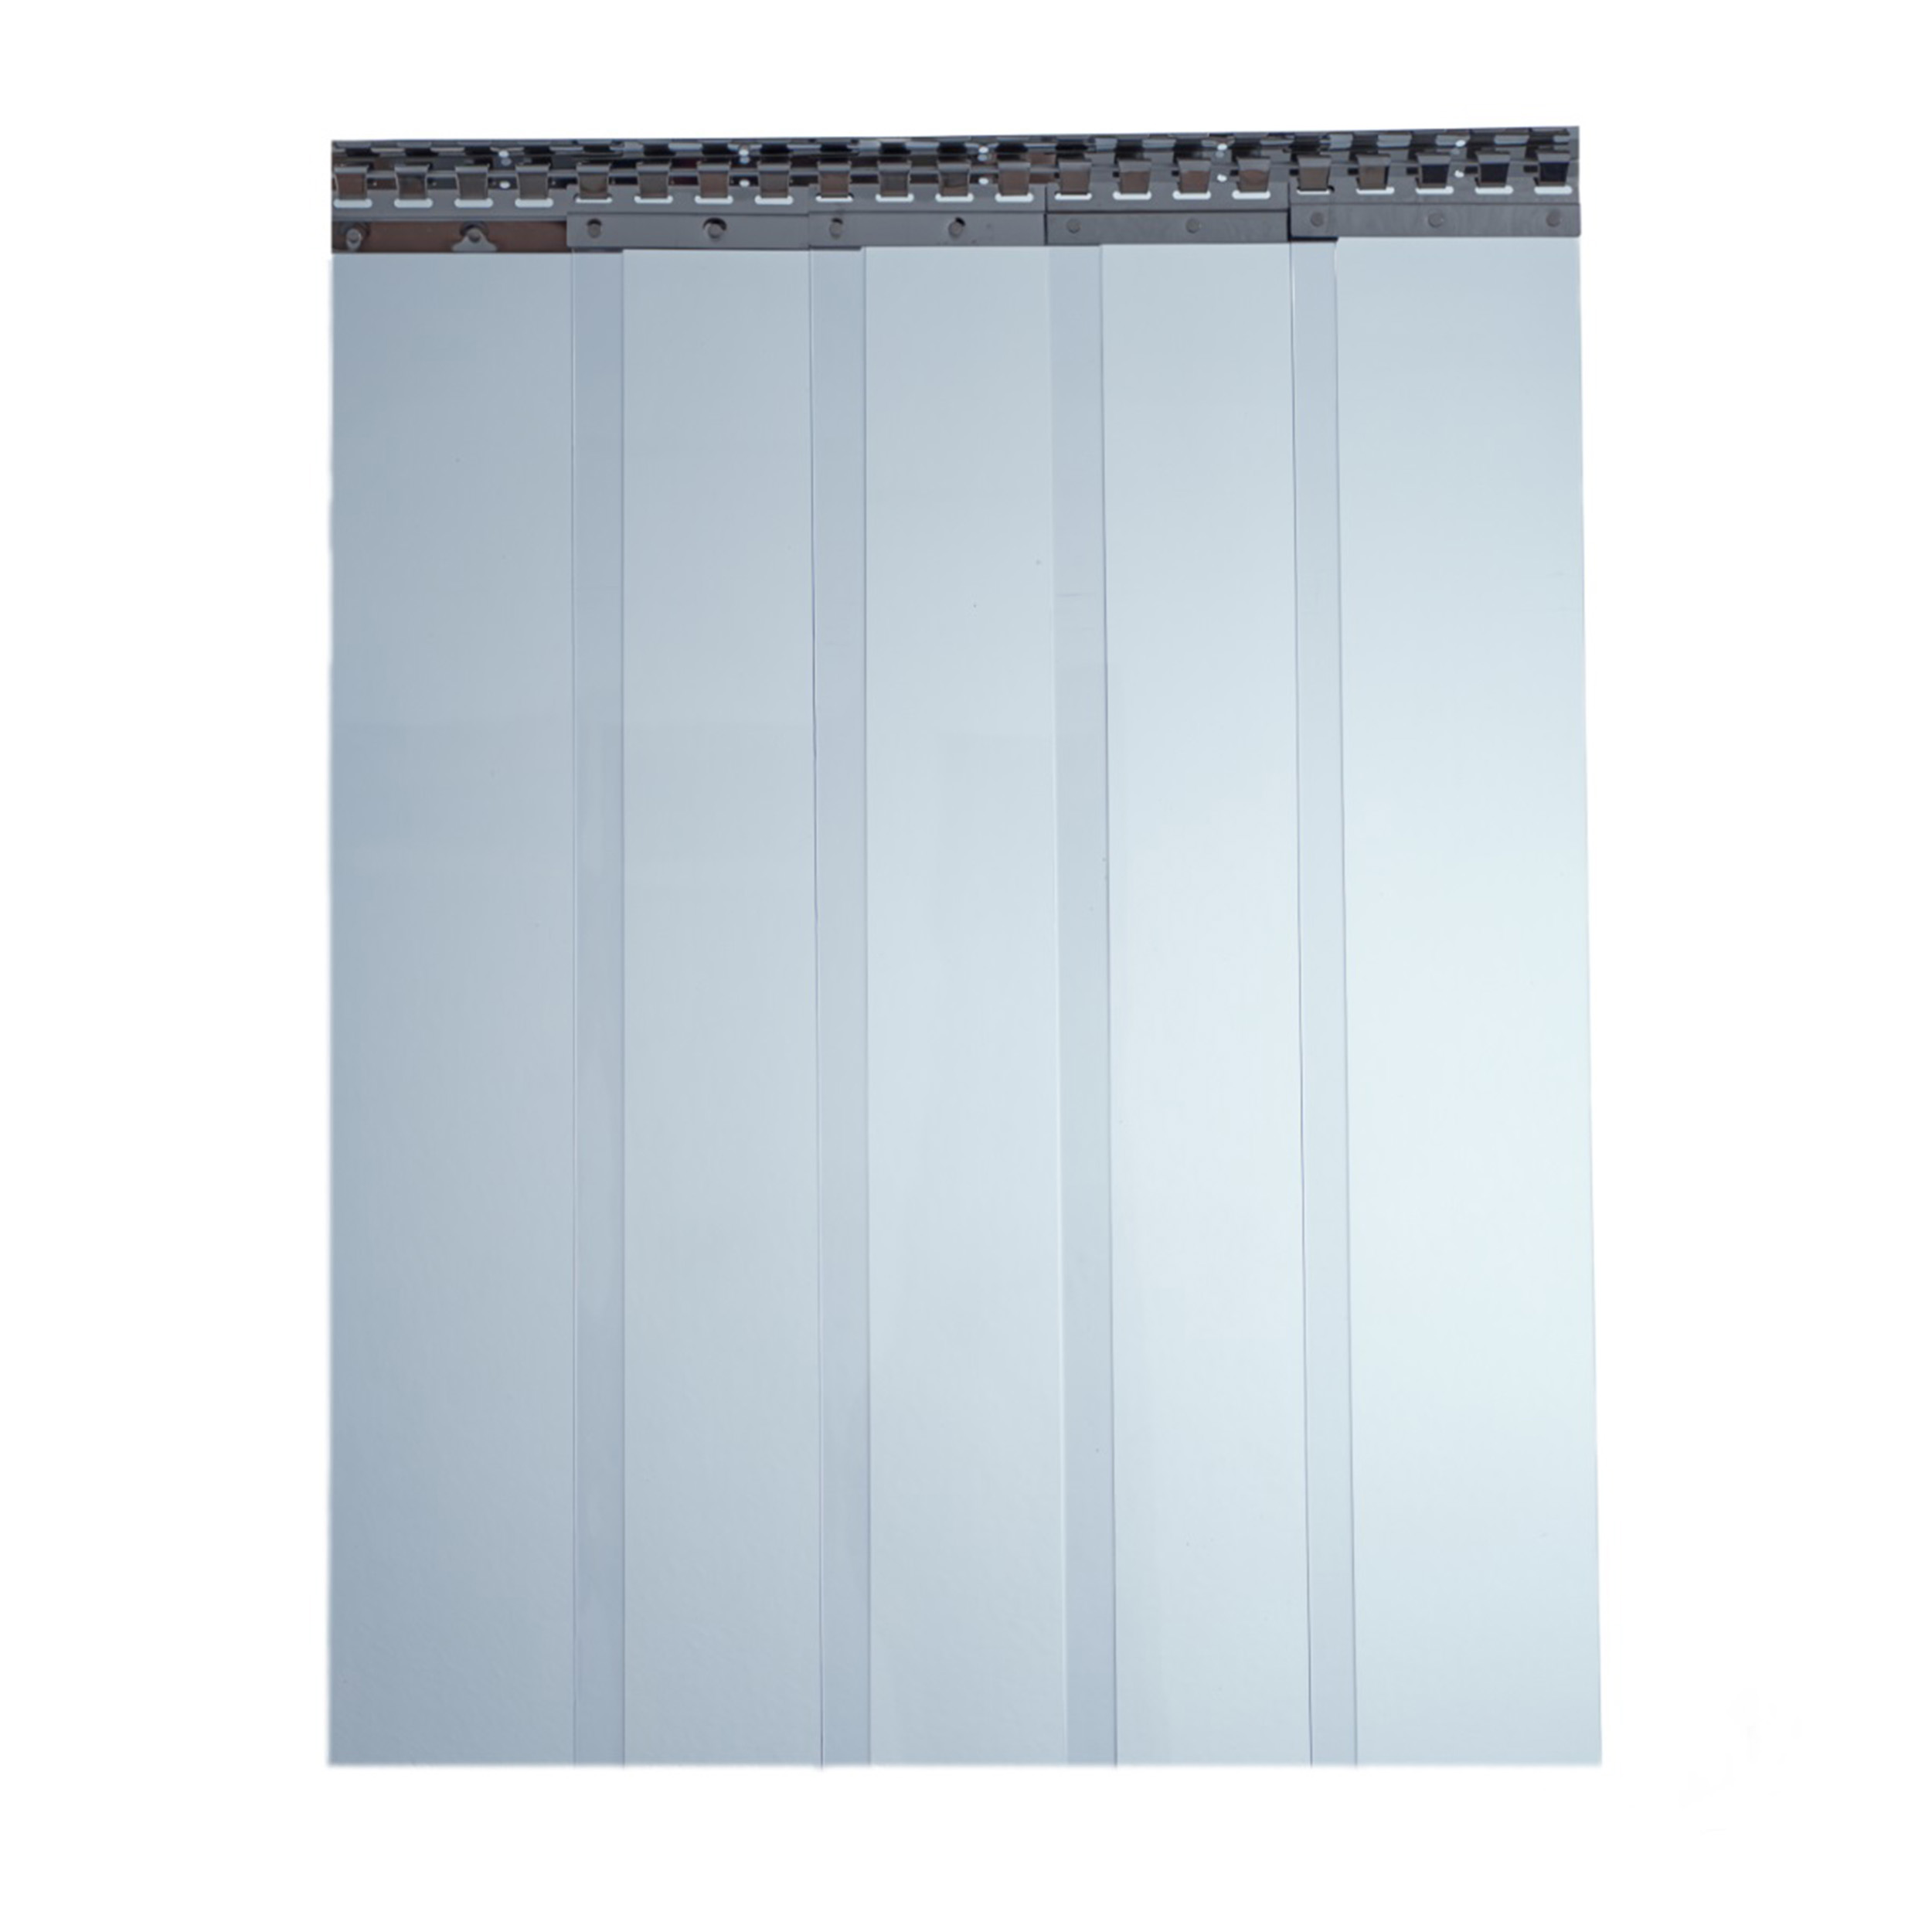 200mm x 2mm blau-transparent Meterware PVC Streifen Vorhang Lamellenvorhang 